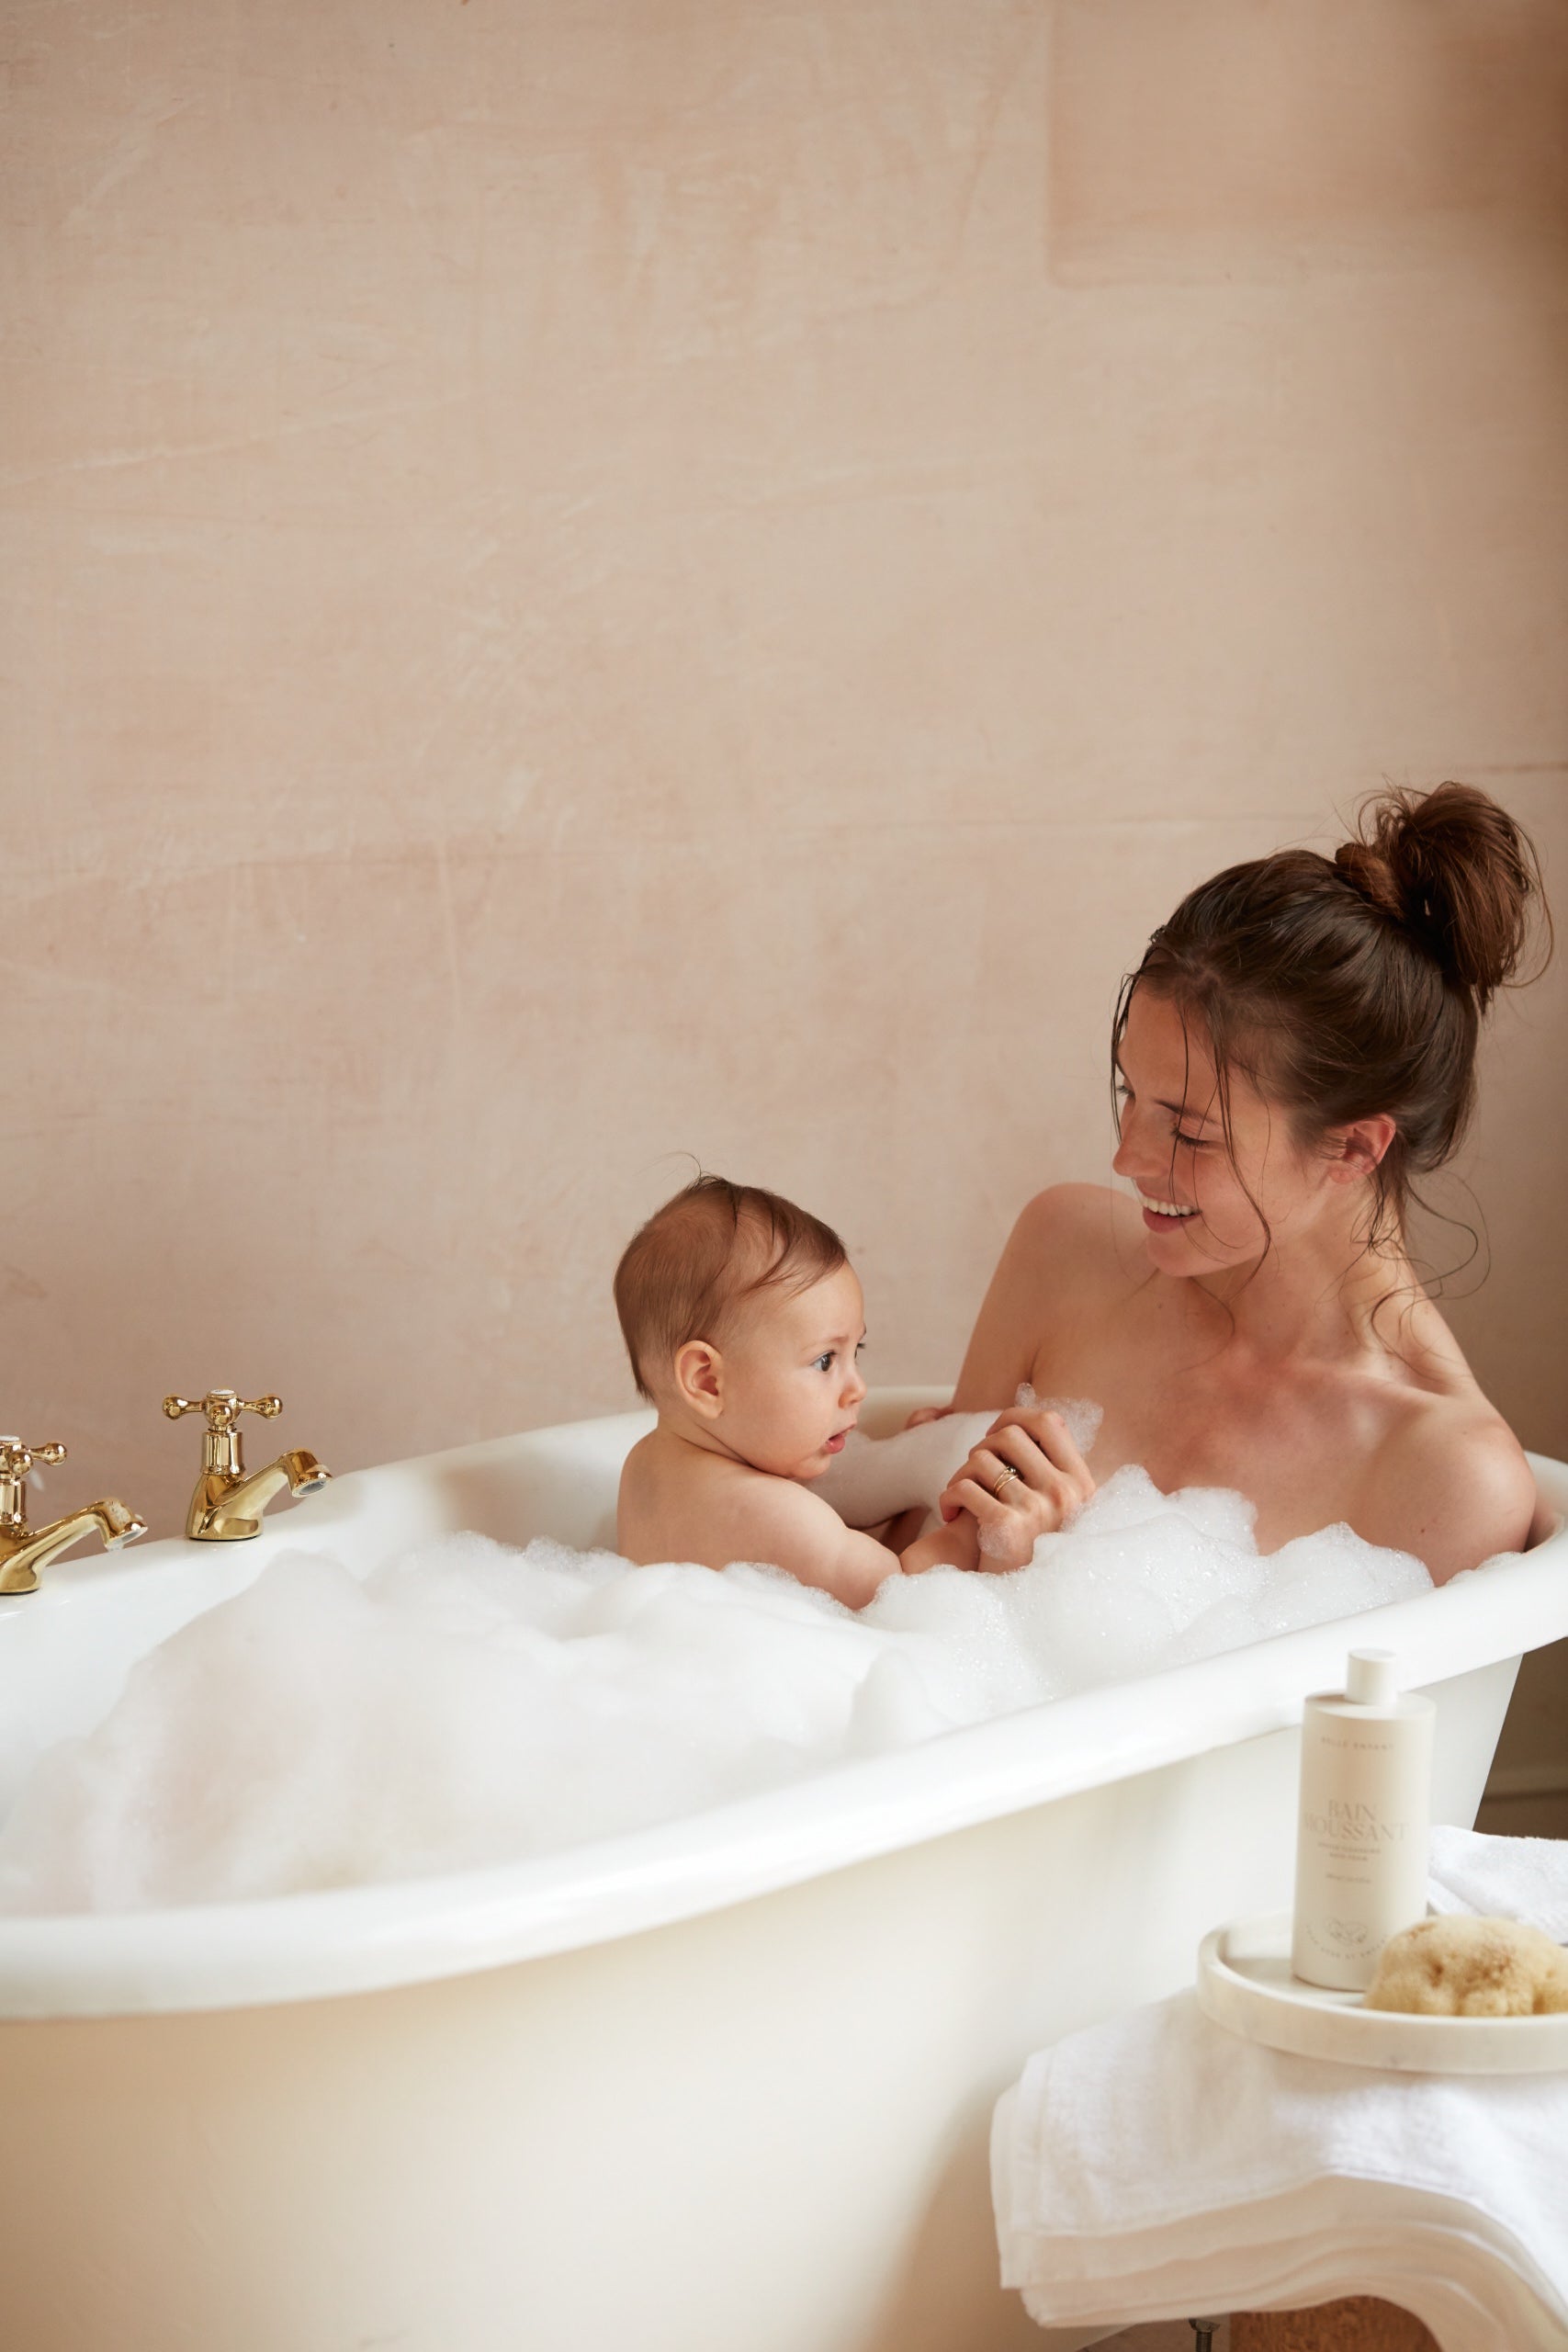 Bain Moussant, Baby Bubble Bath, Luxury Baby Skincare